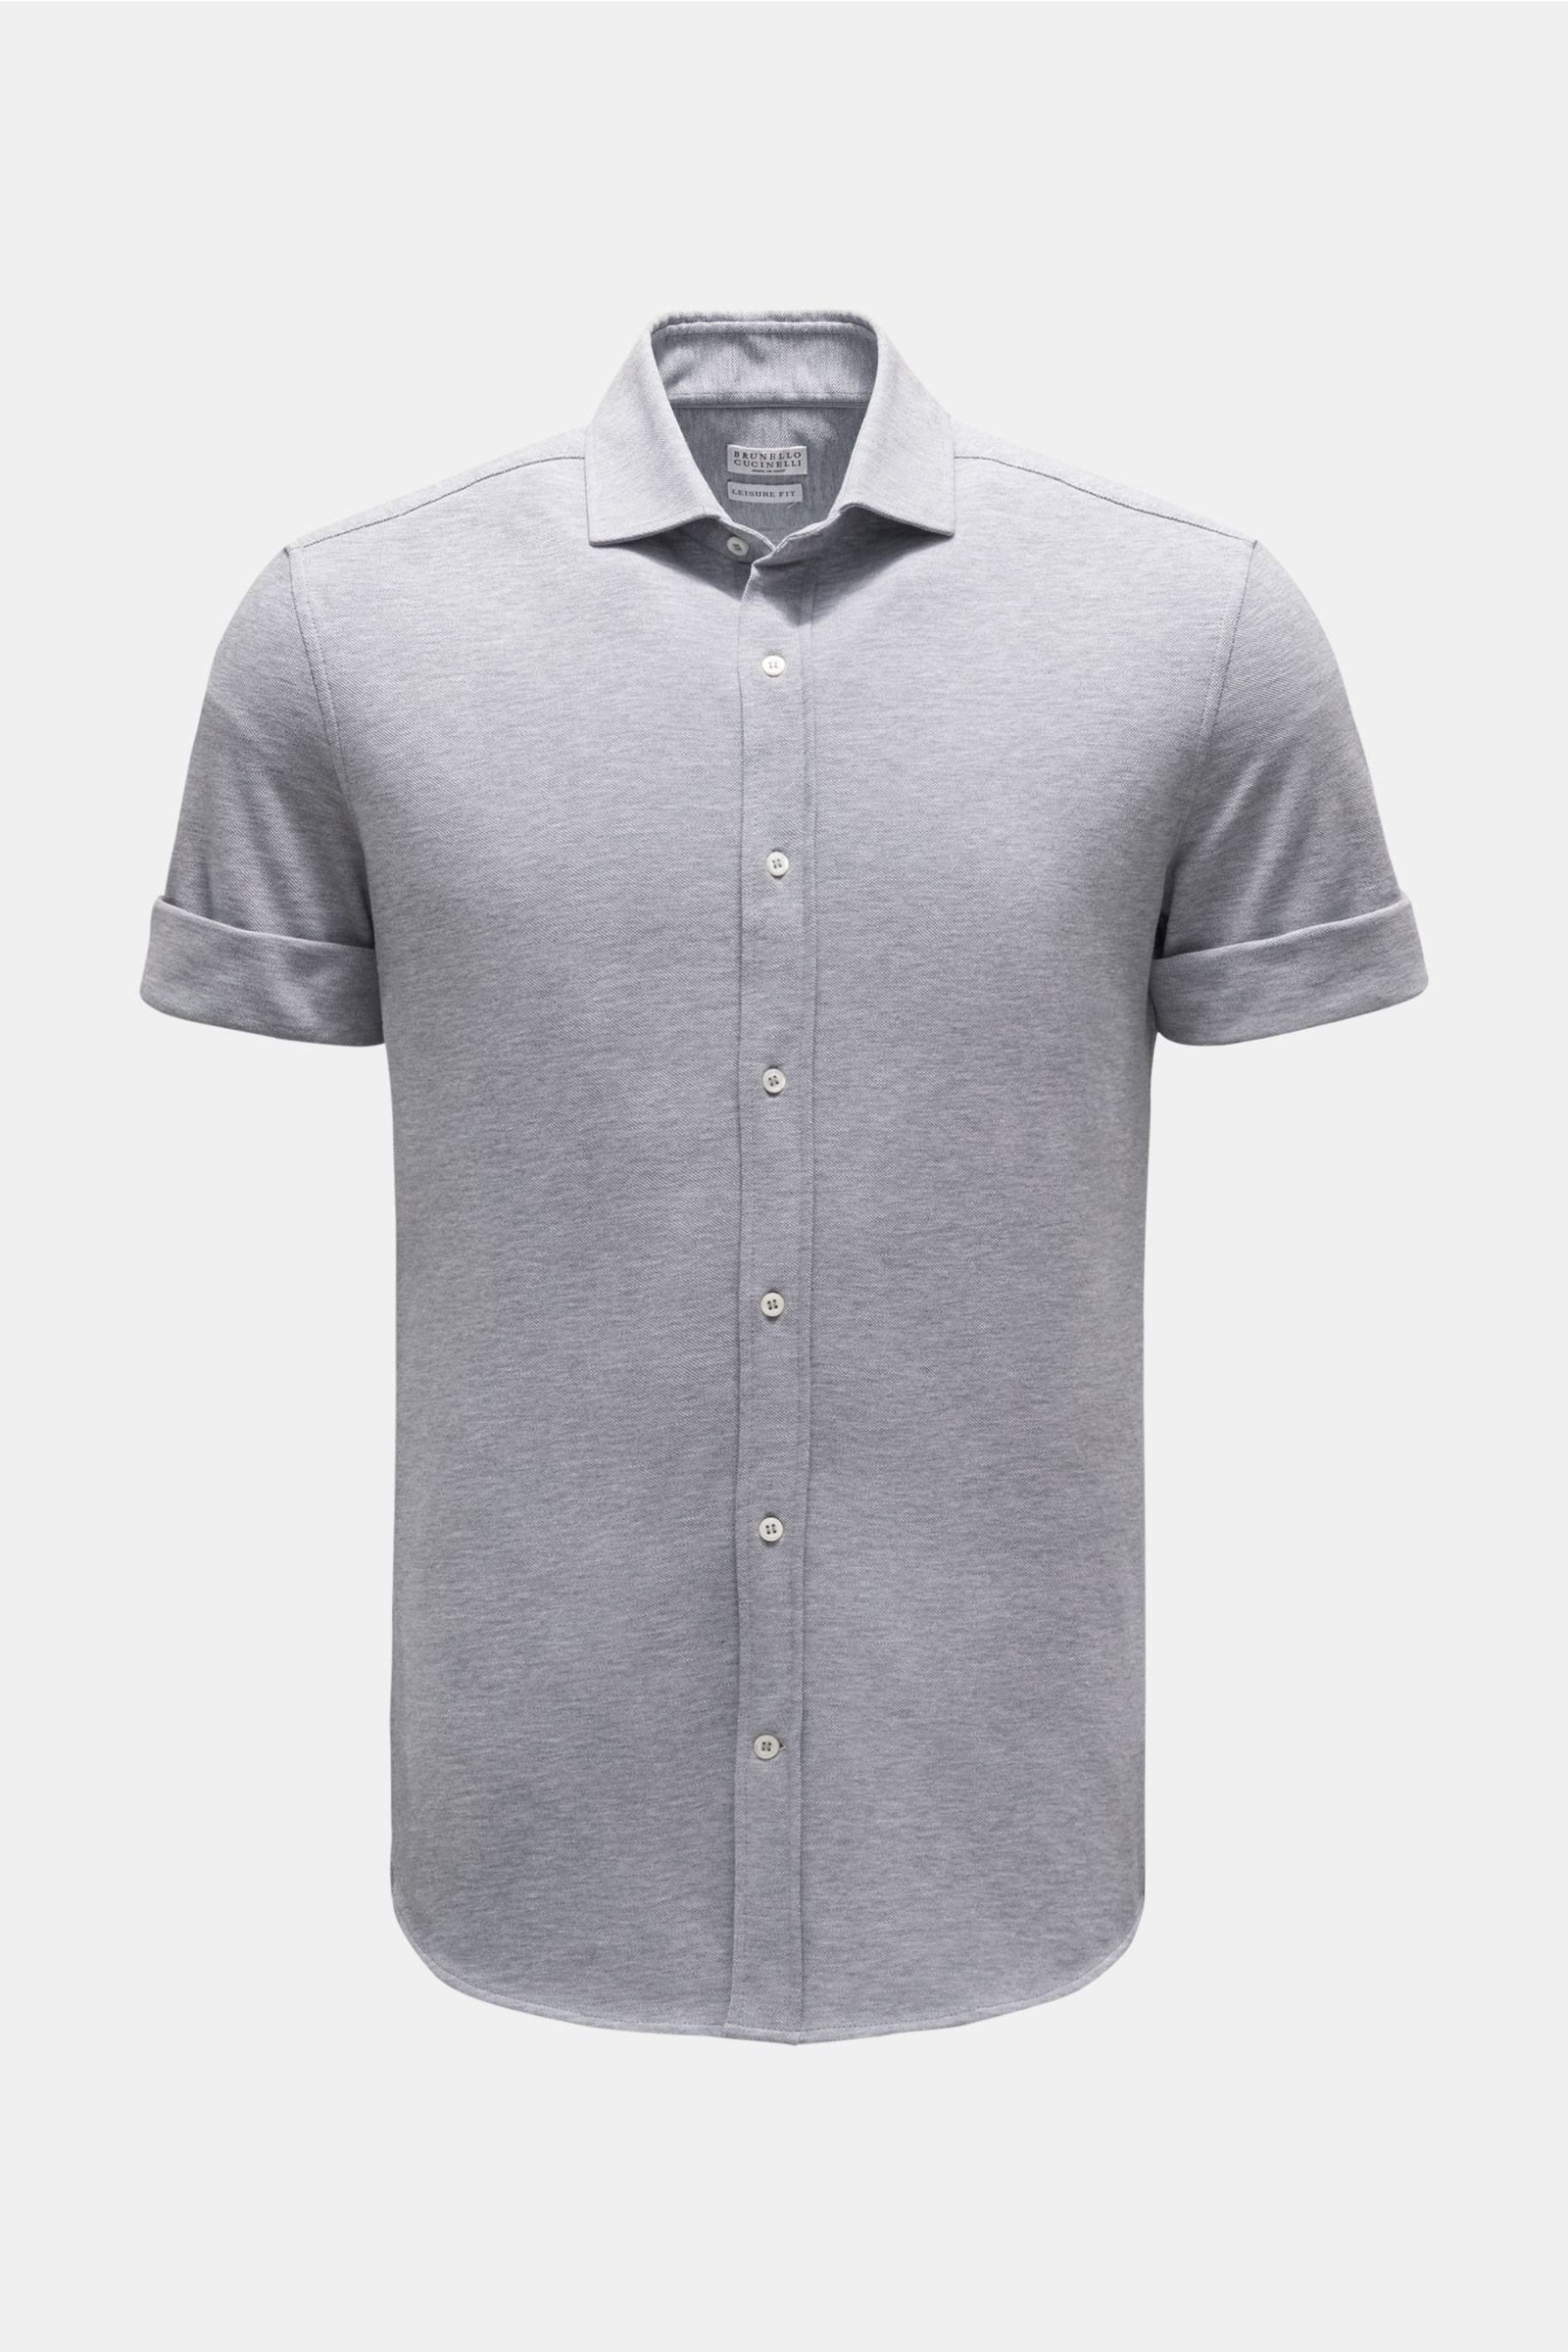 Jersey short sleeve shirt 'Leisure Fit' narrow collar grey